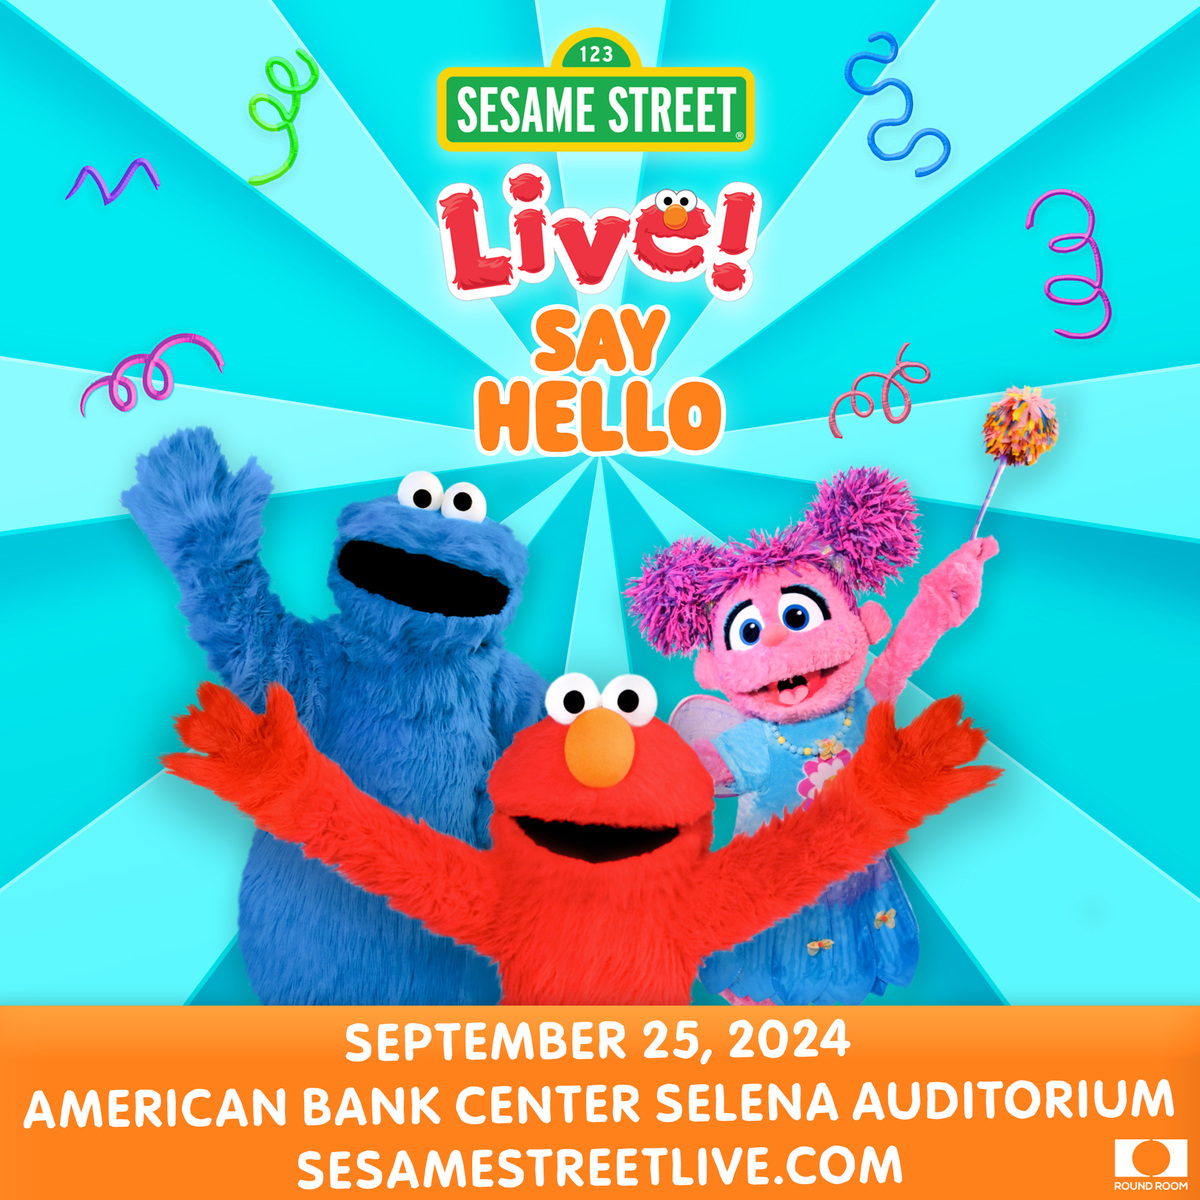 Sesame Street Live! “Say Hello” 